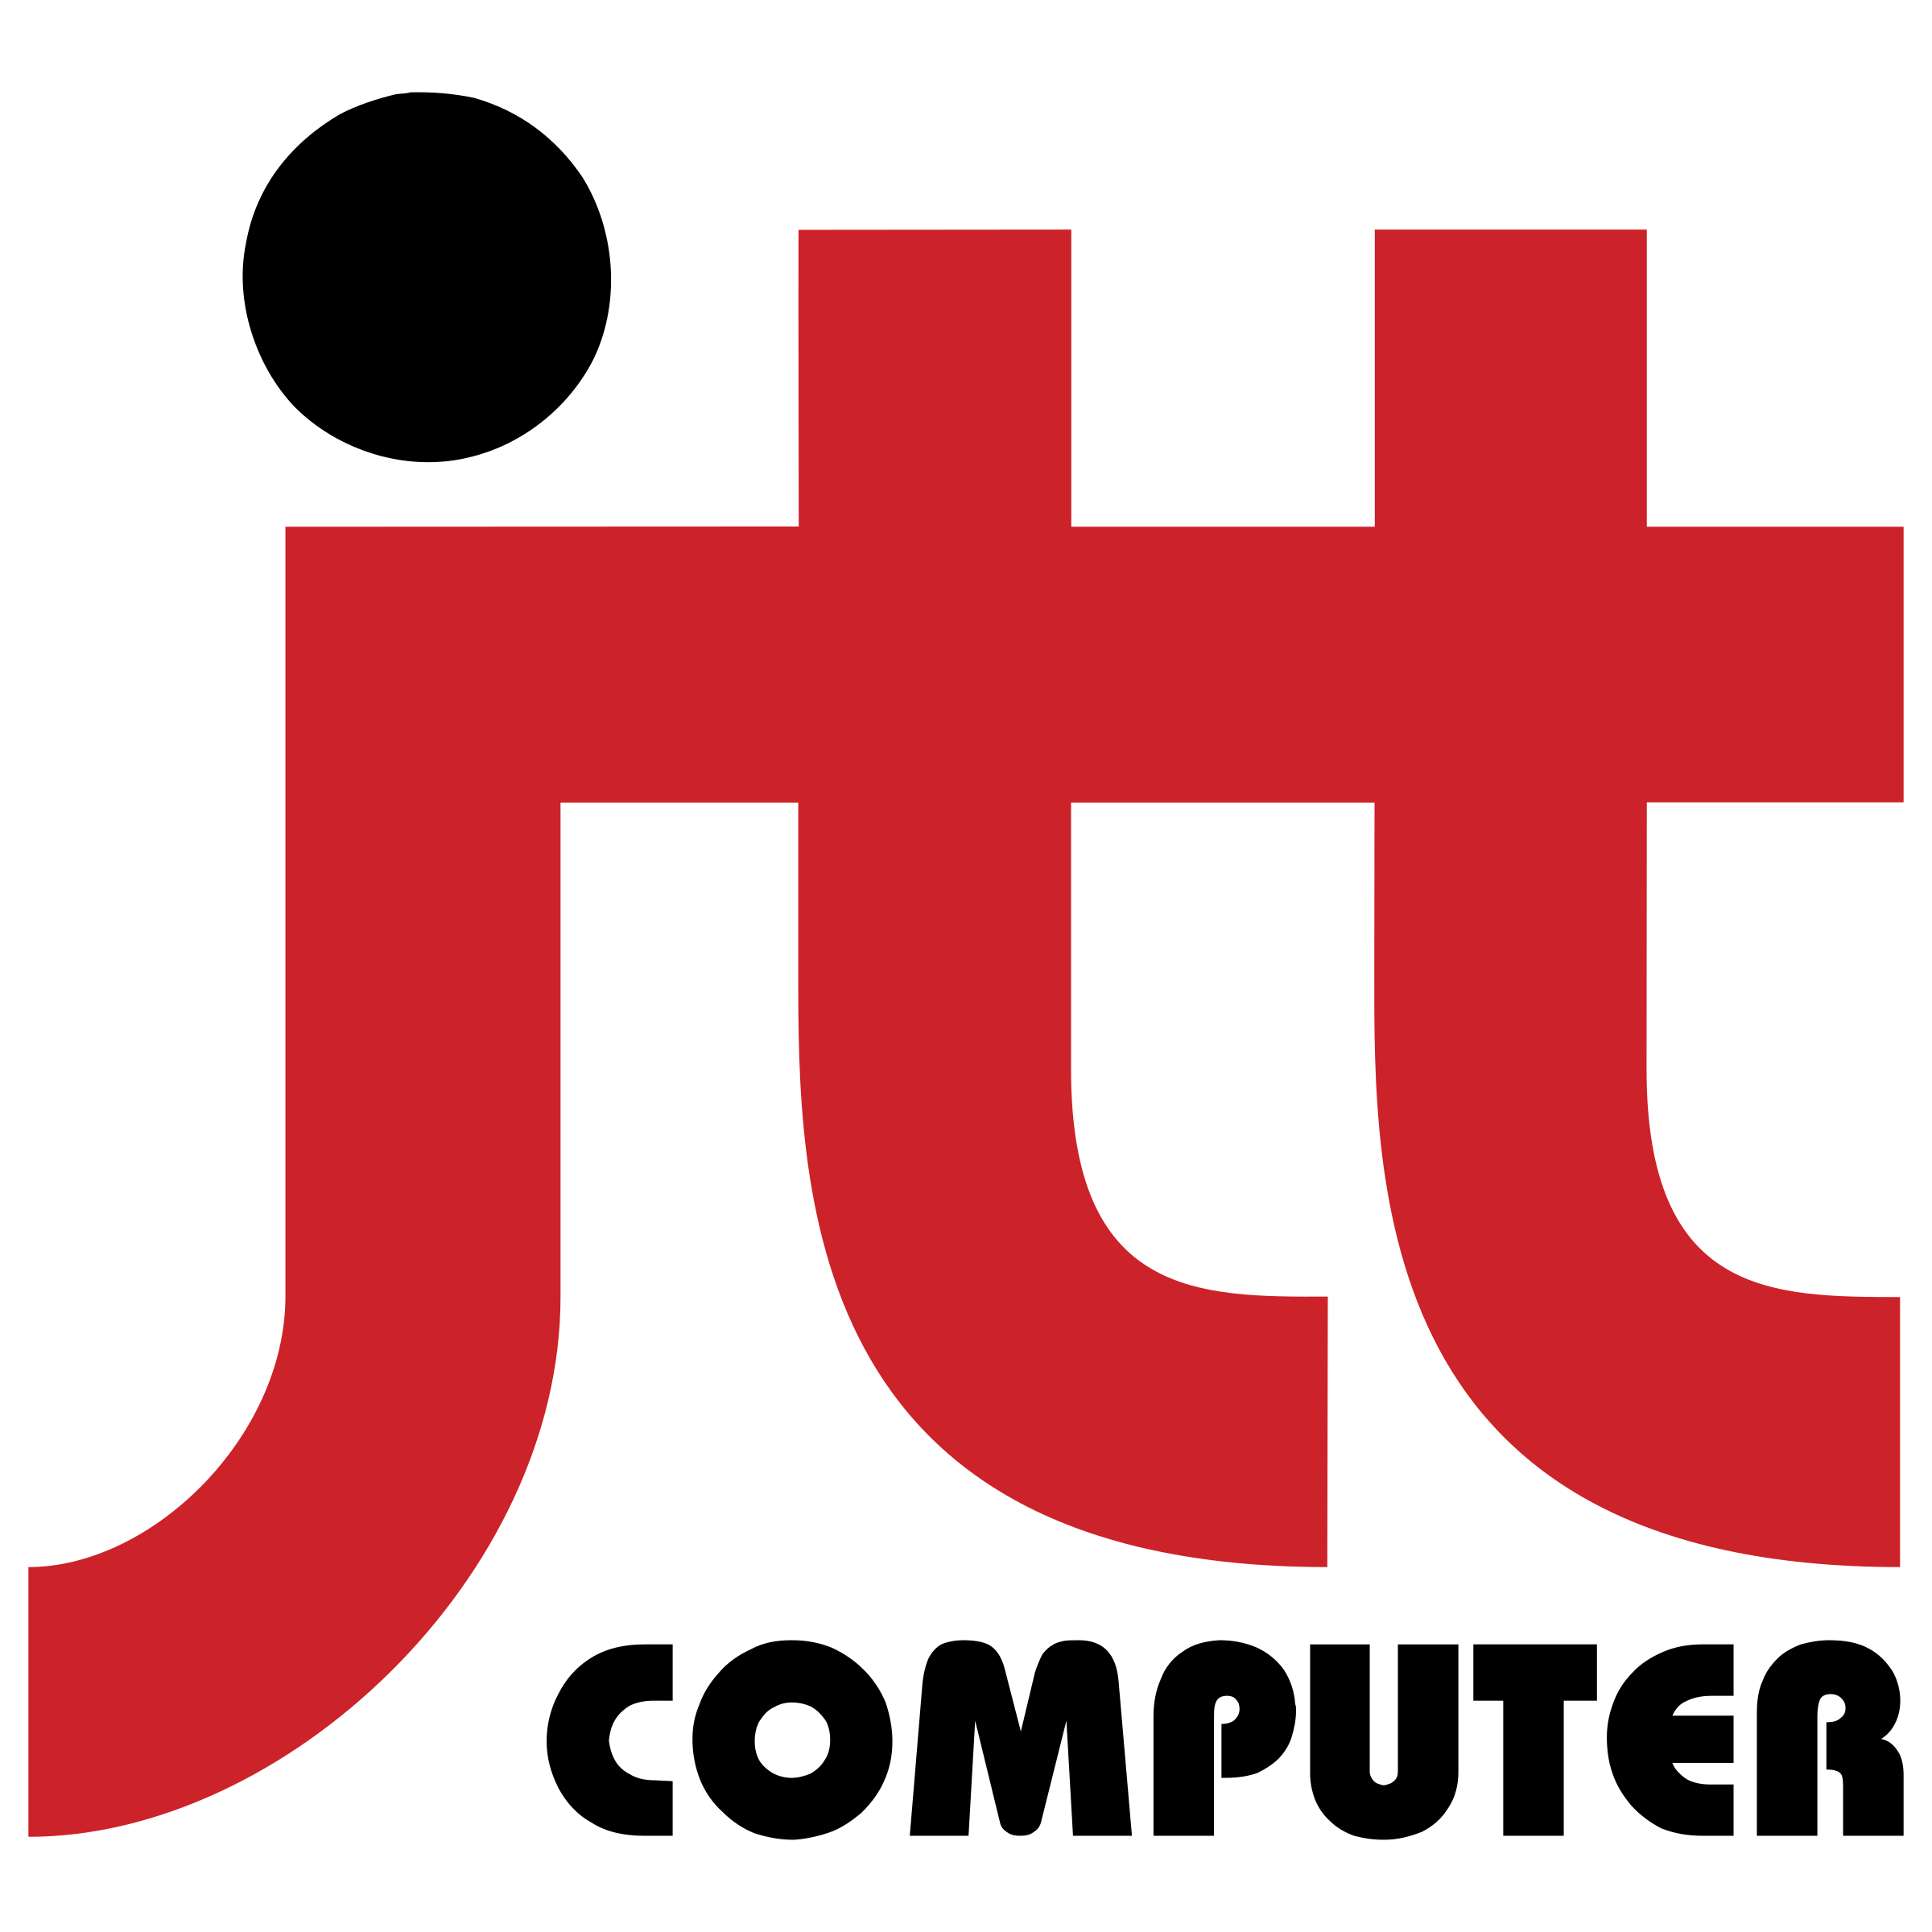 JTT Logo - JTT Computer Logo PNG Transparent & SVG Vector - Freebie Supply